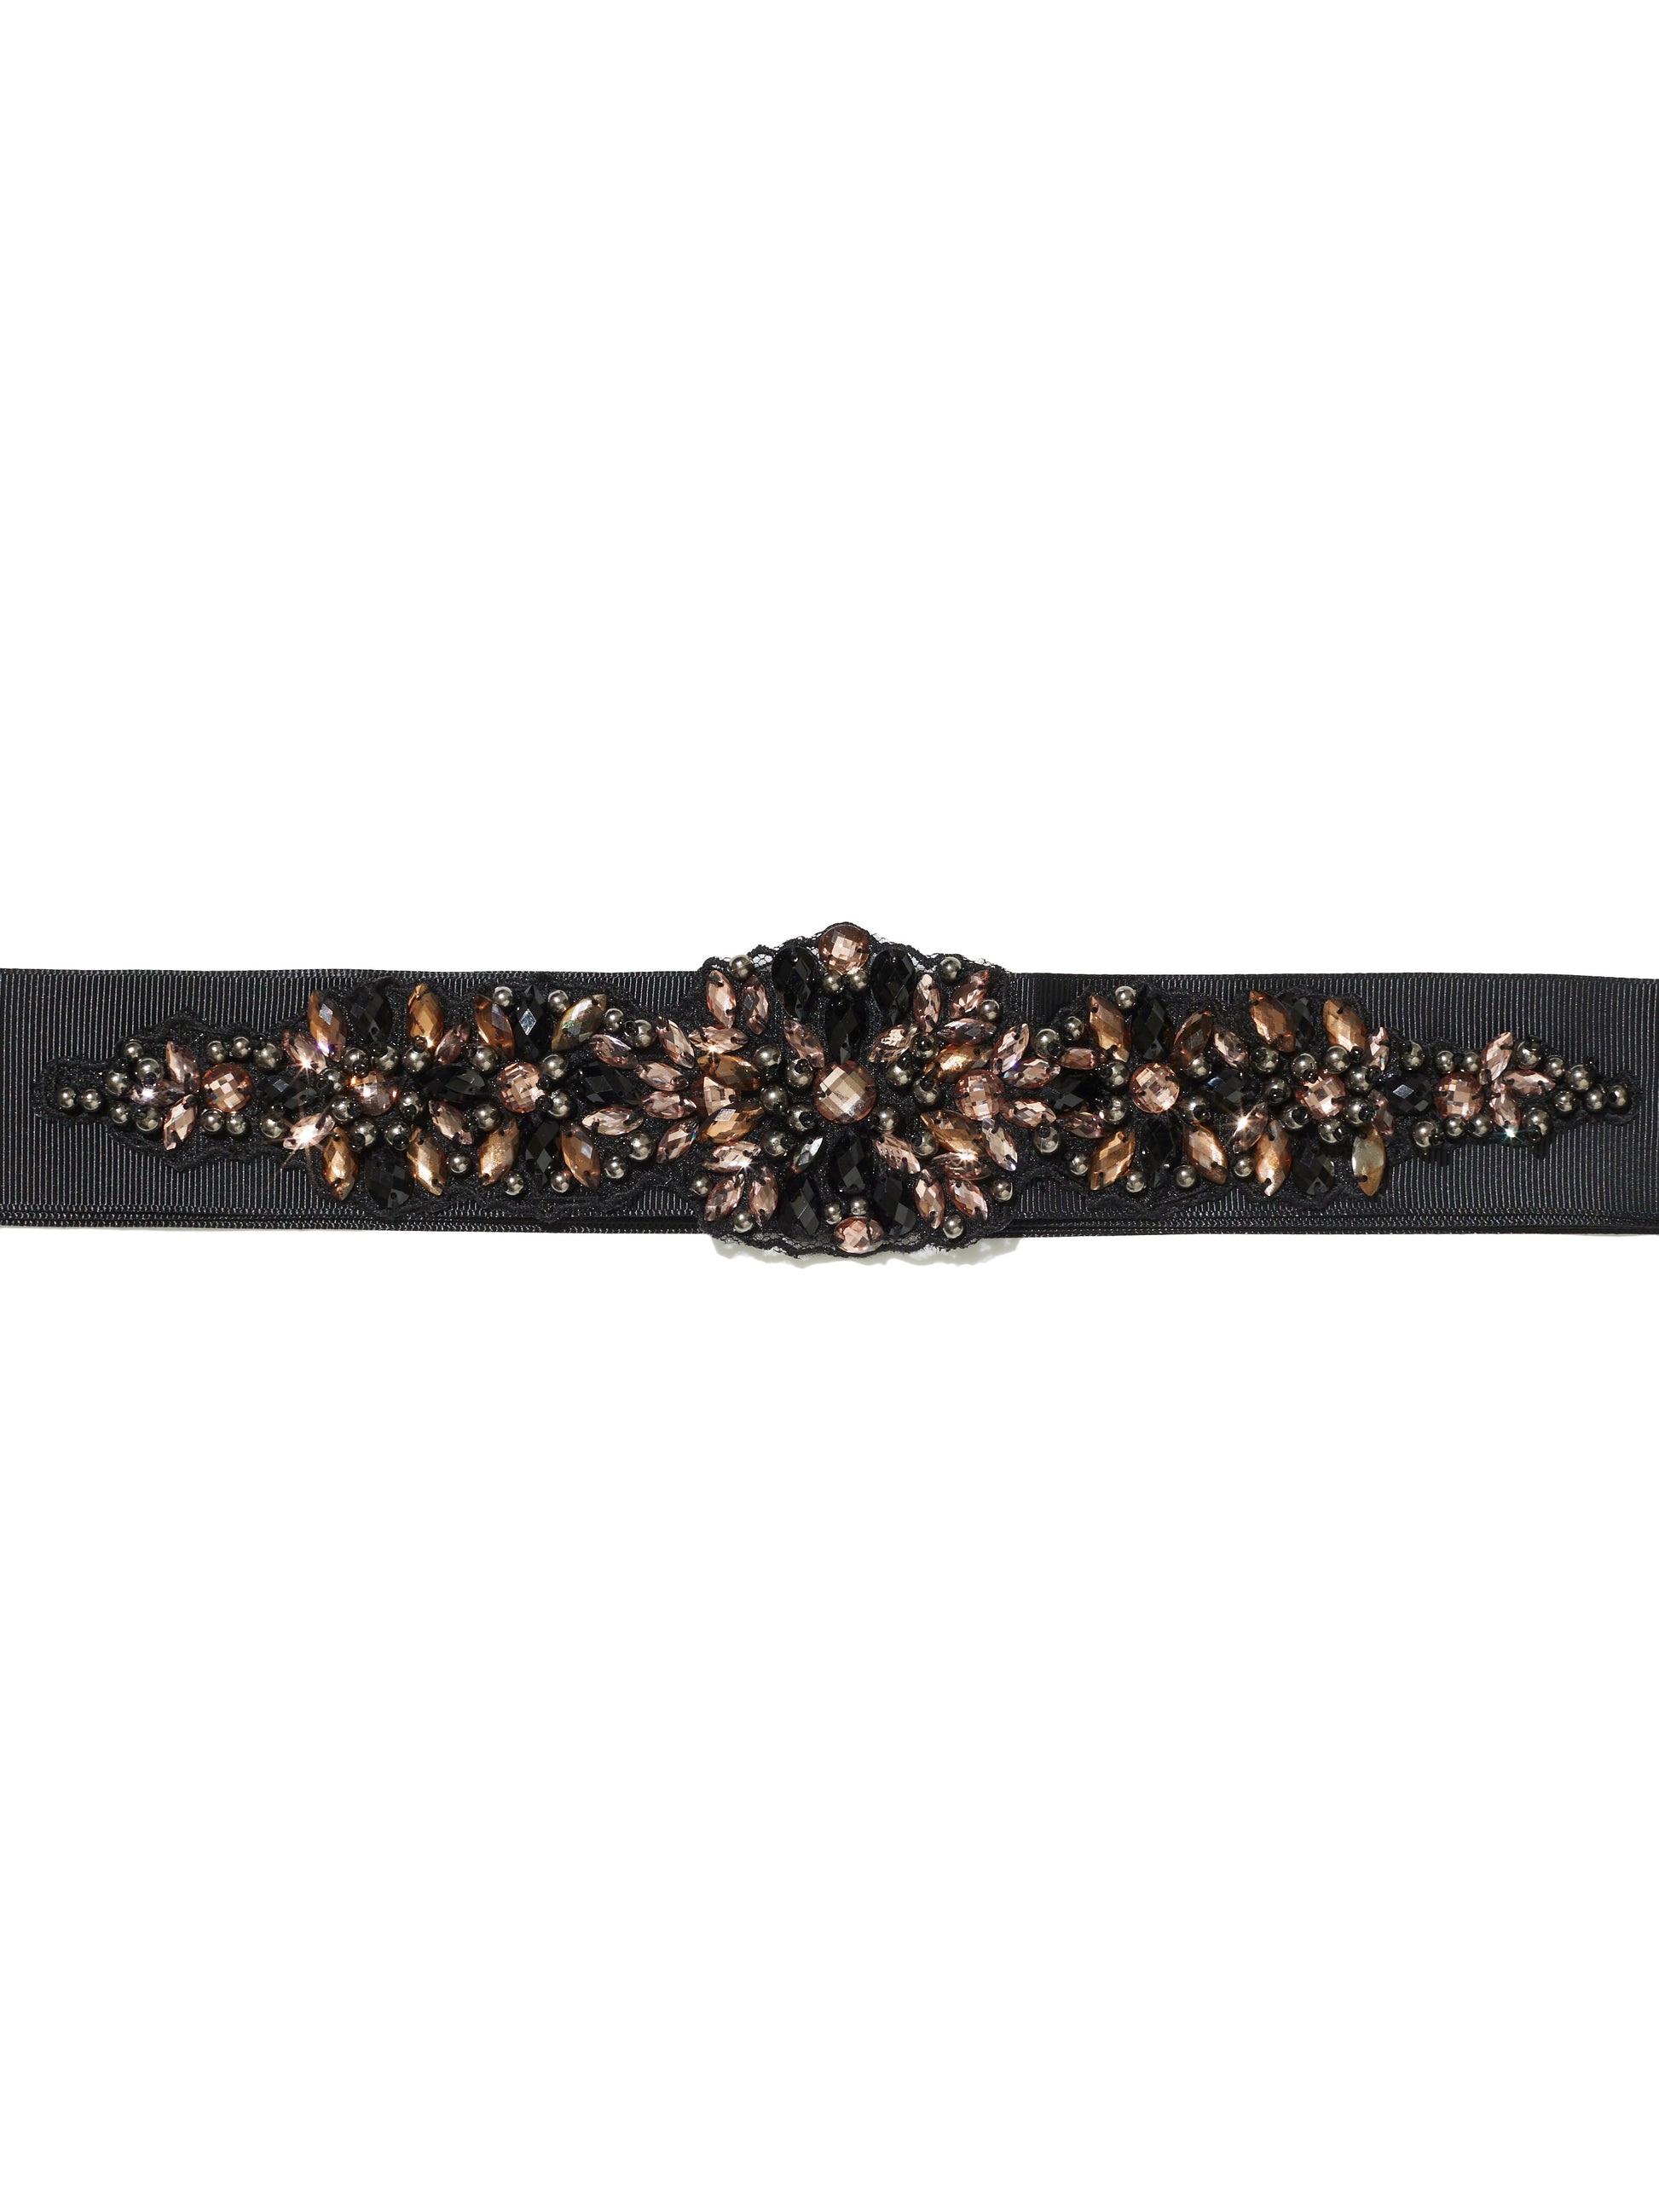 Tara Black Beaded Ribbon Belt by Montique